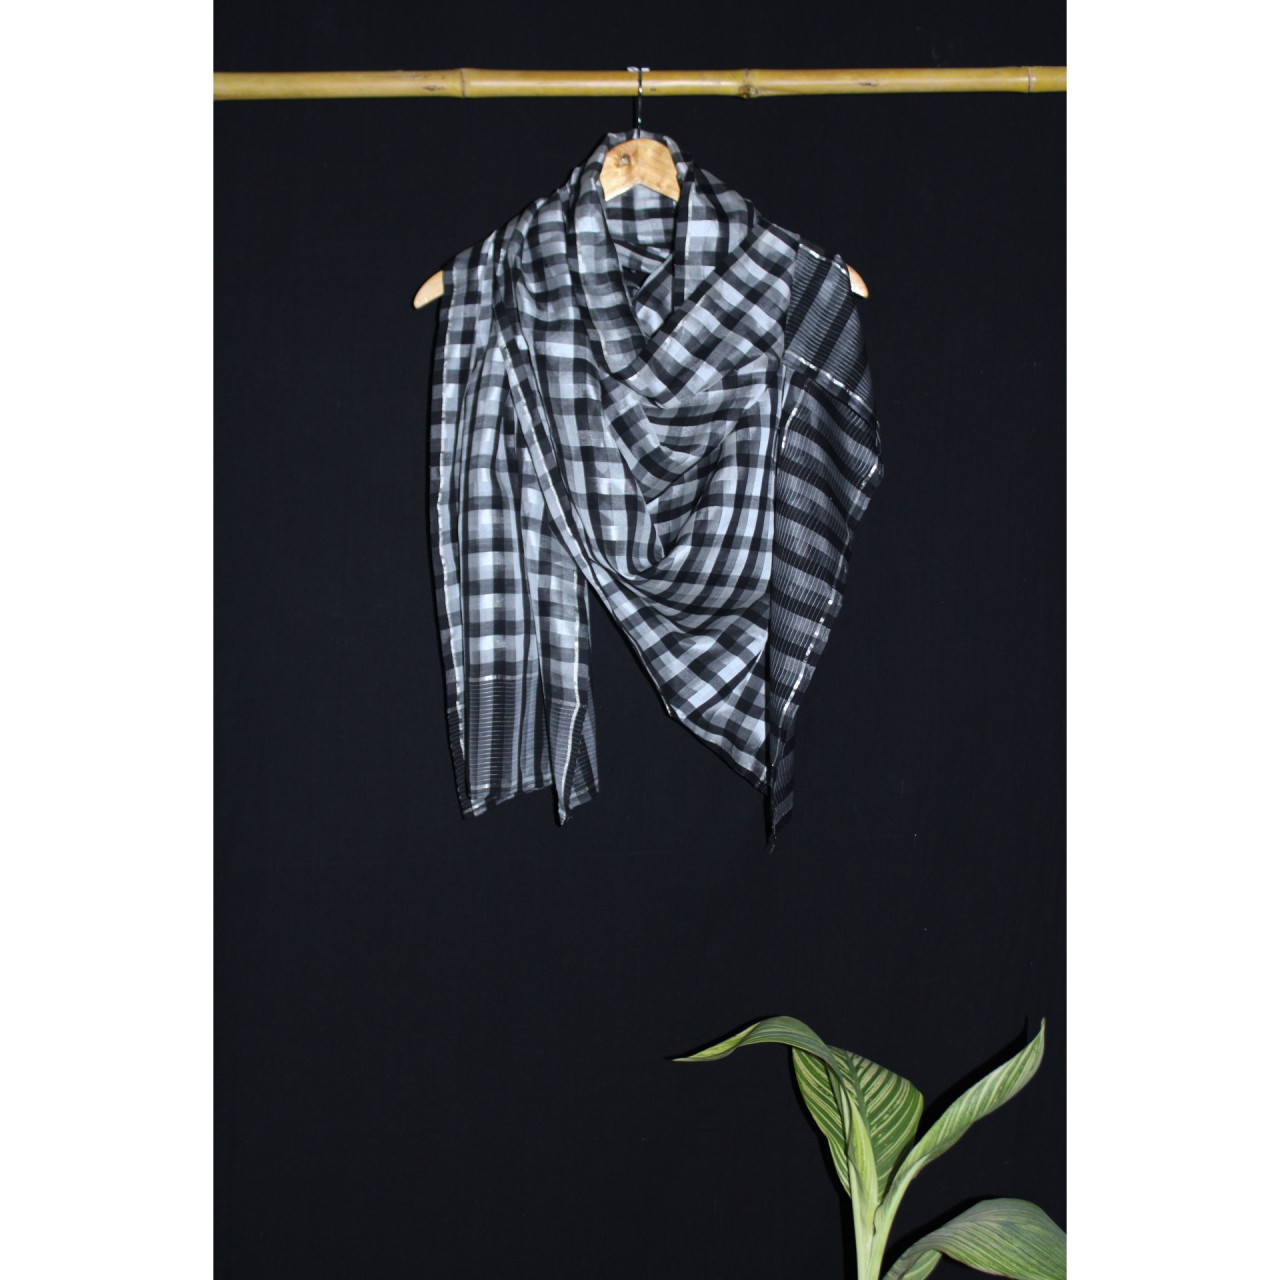 (2173) Mulberry silk, cotton and zari Azo-free dyed stole from Maheshwar - White, black, checks, stripes, silver zari